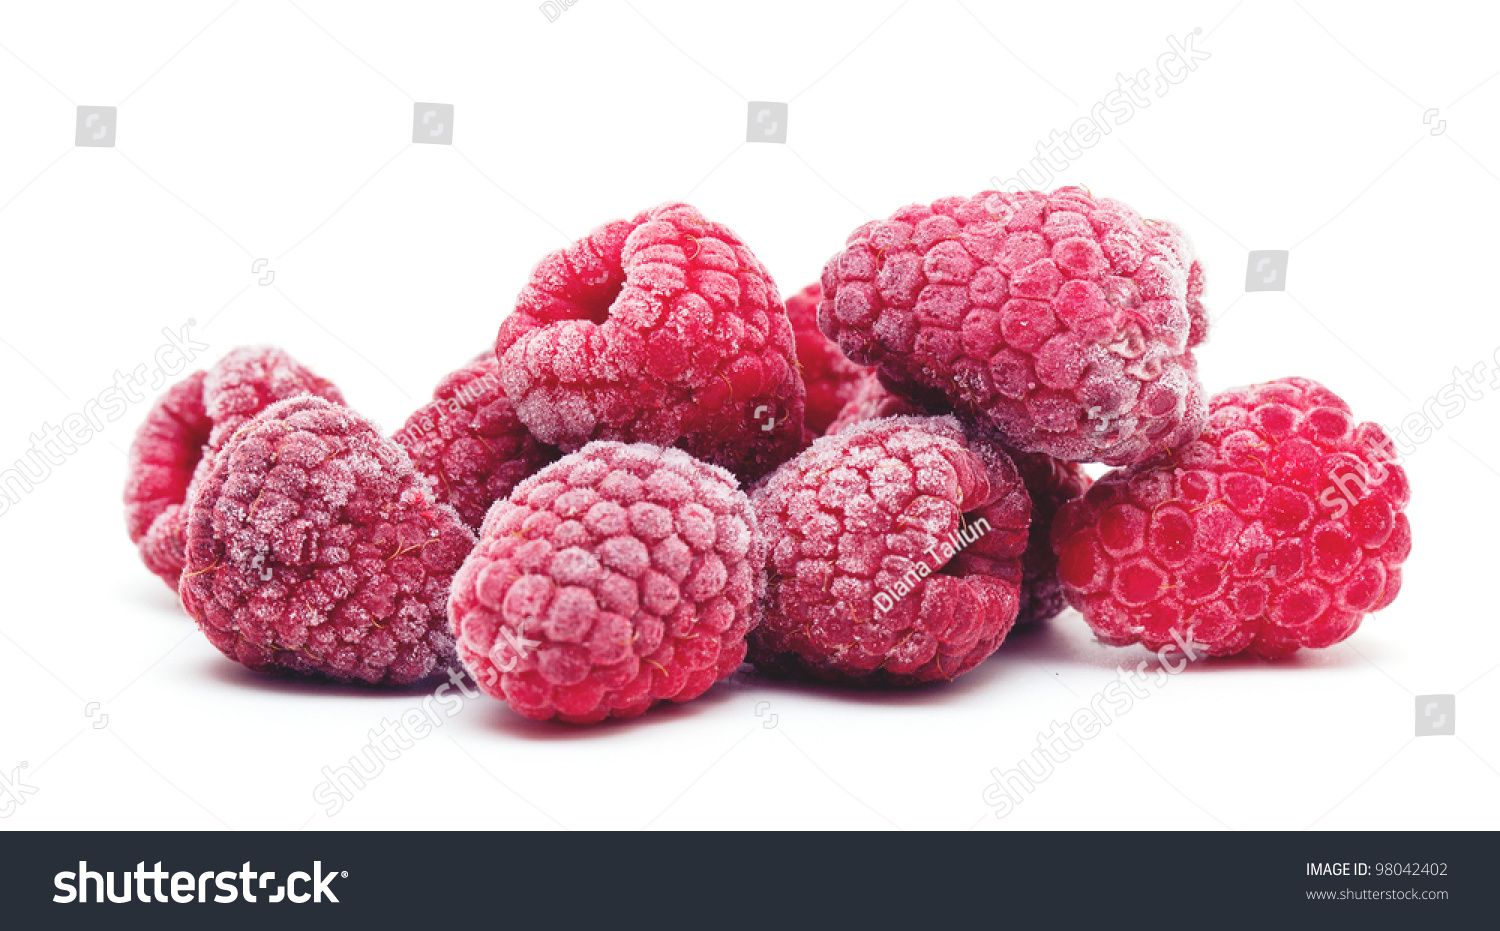 stock-photo-frozen-raspberries-isolated-on-white-98042402.jpg